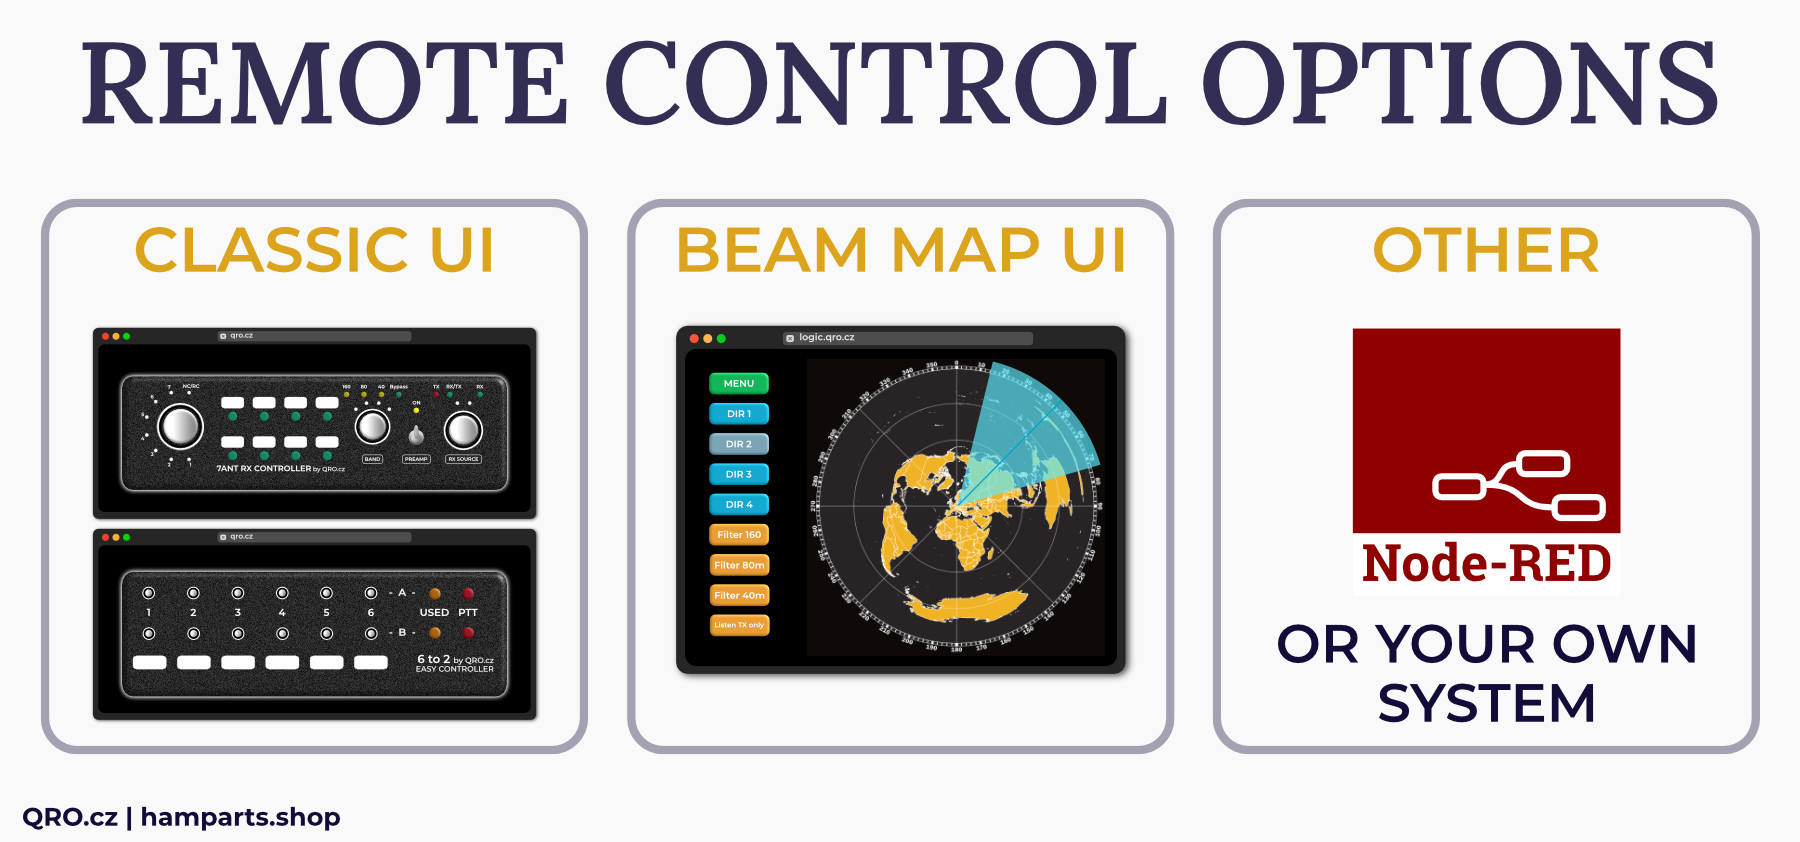 remotius 64 controller control options by qro.cz hamparts.shop